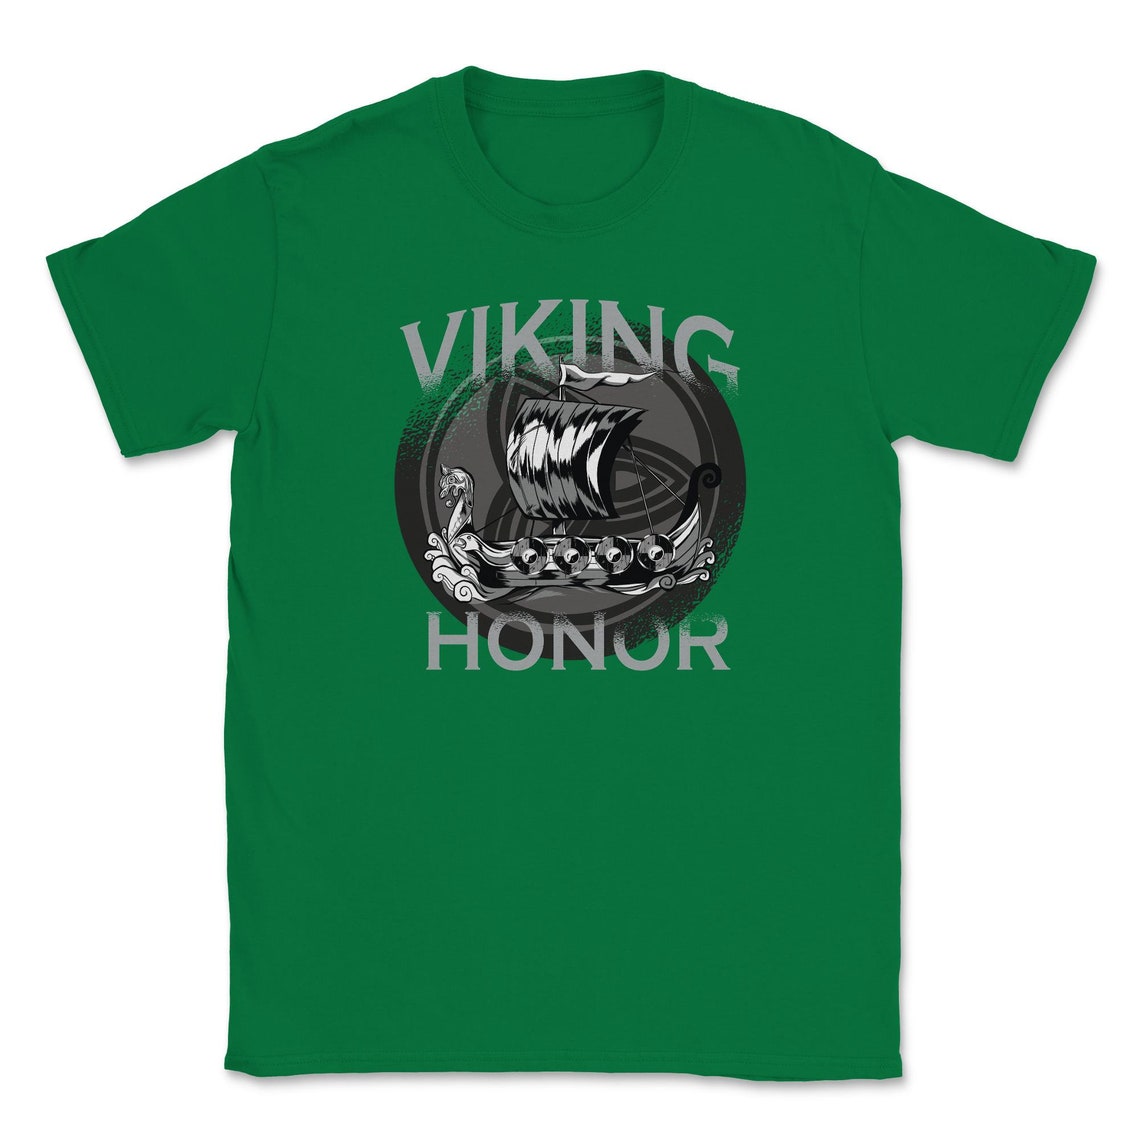 Viking honor Cool medieval tees. | Etsy